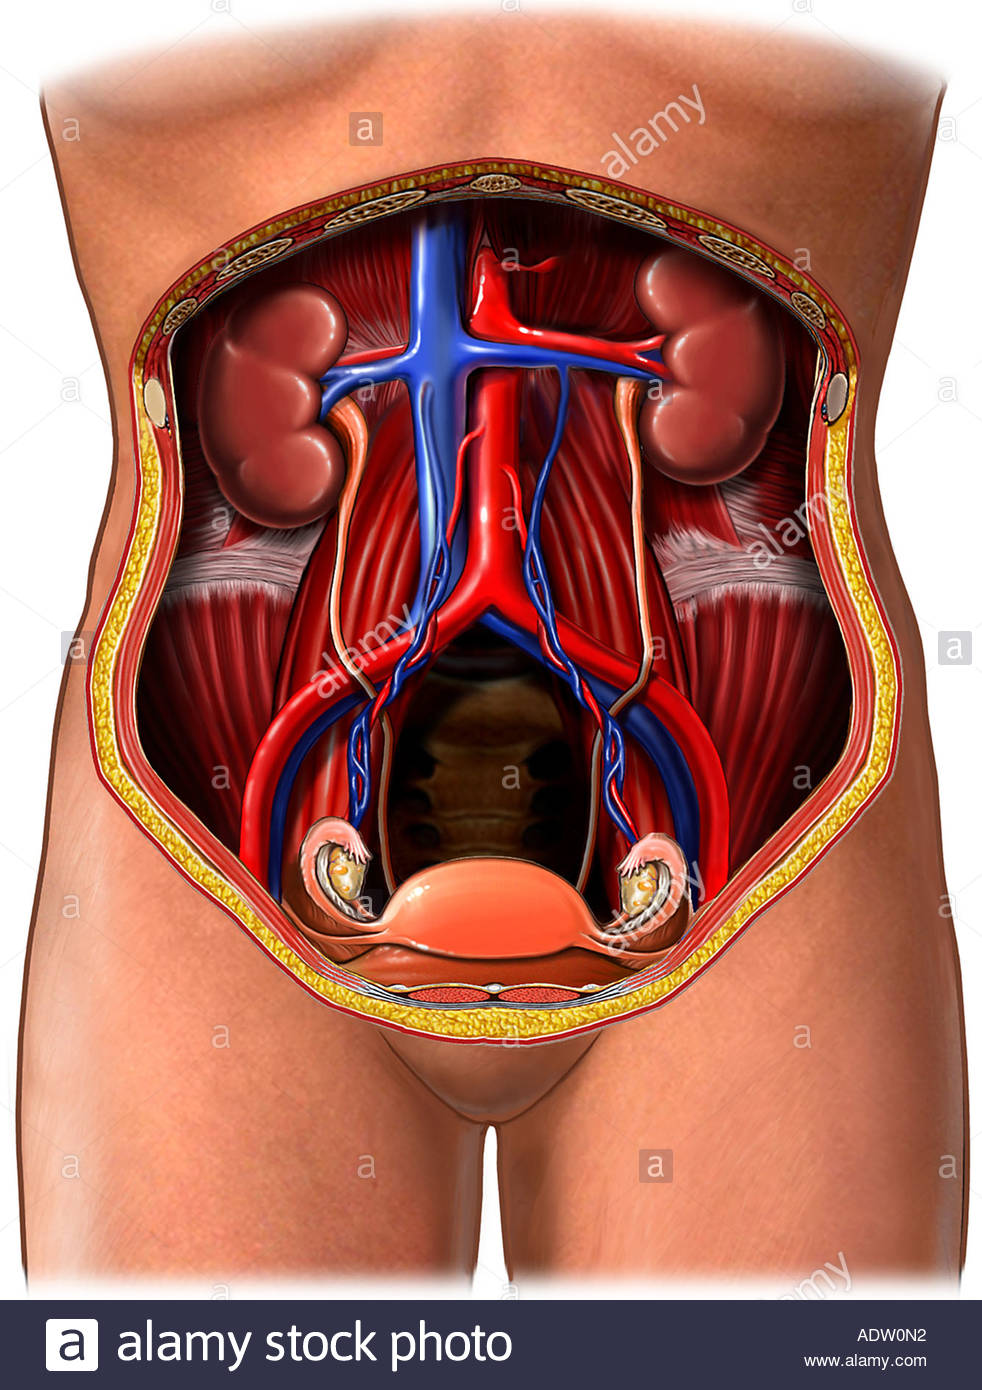 Анатомия женщины низ живота